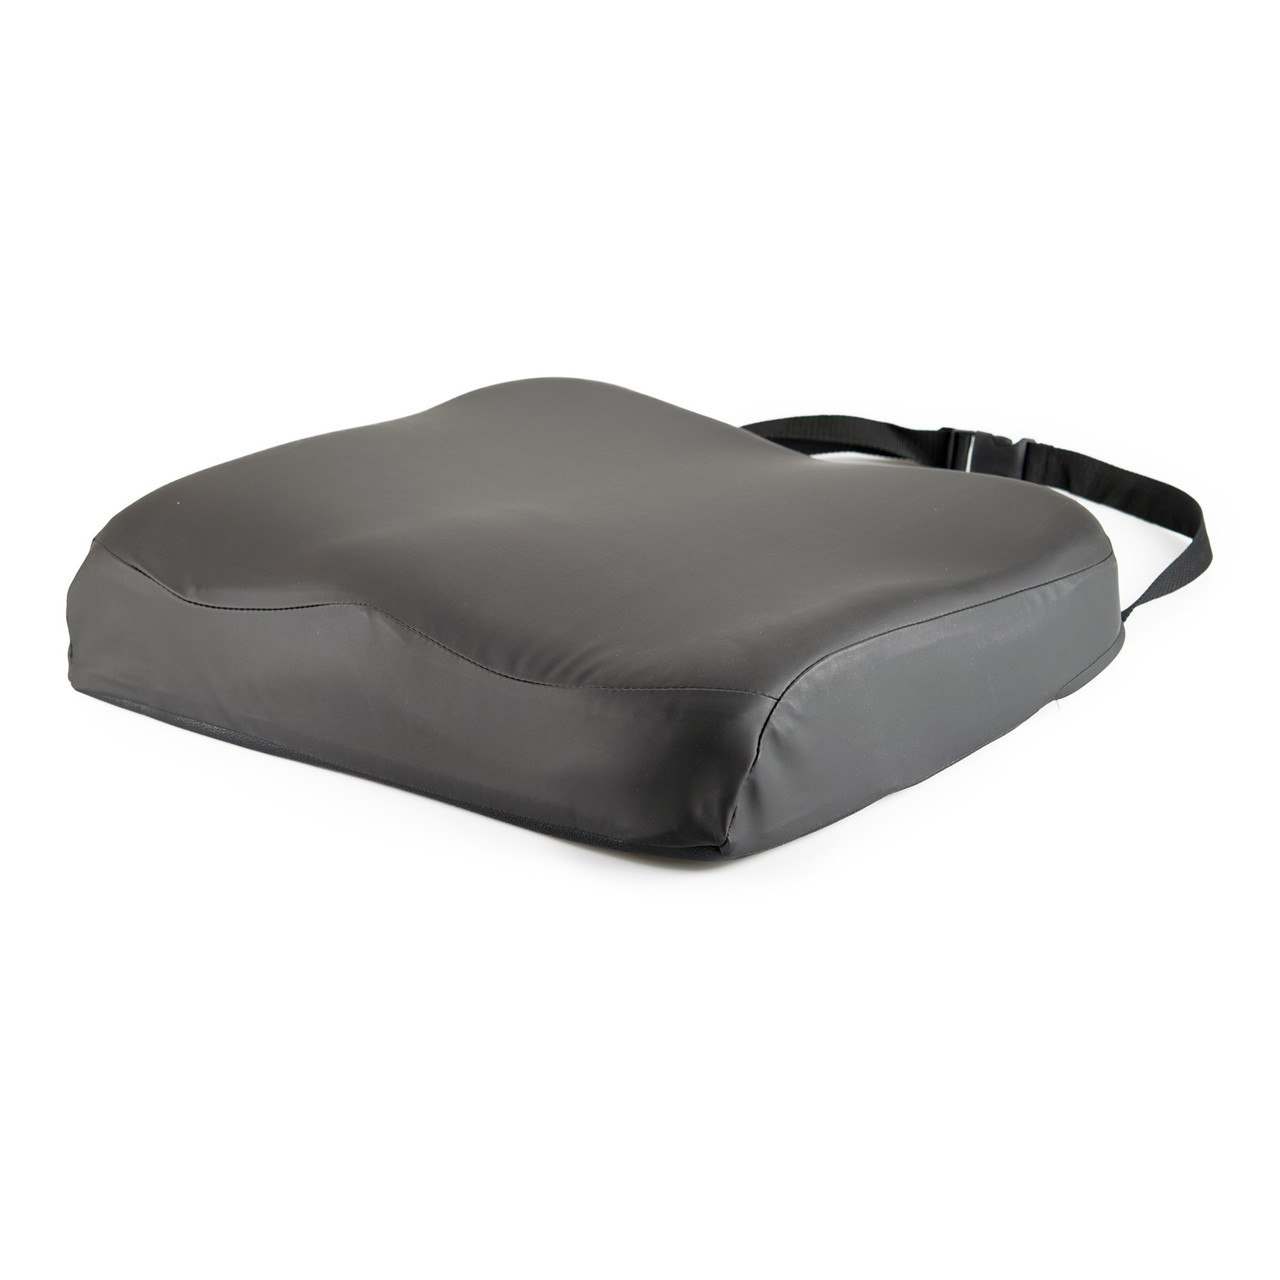 McKesson Molded Foam Seat Cushion, 16 x 16 x 3 in